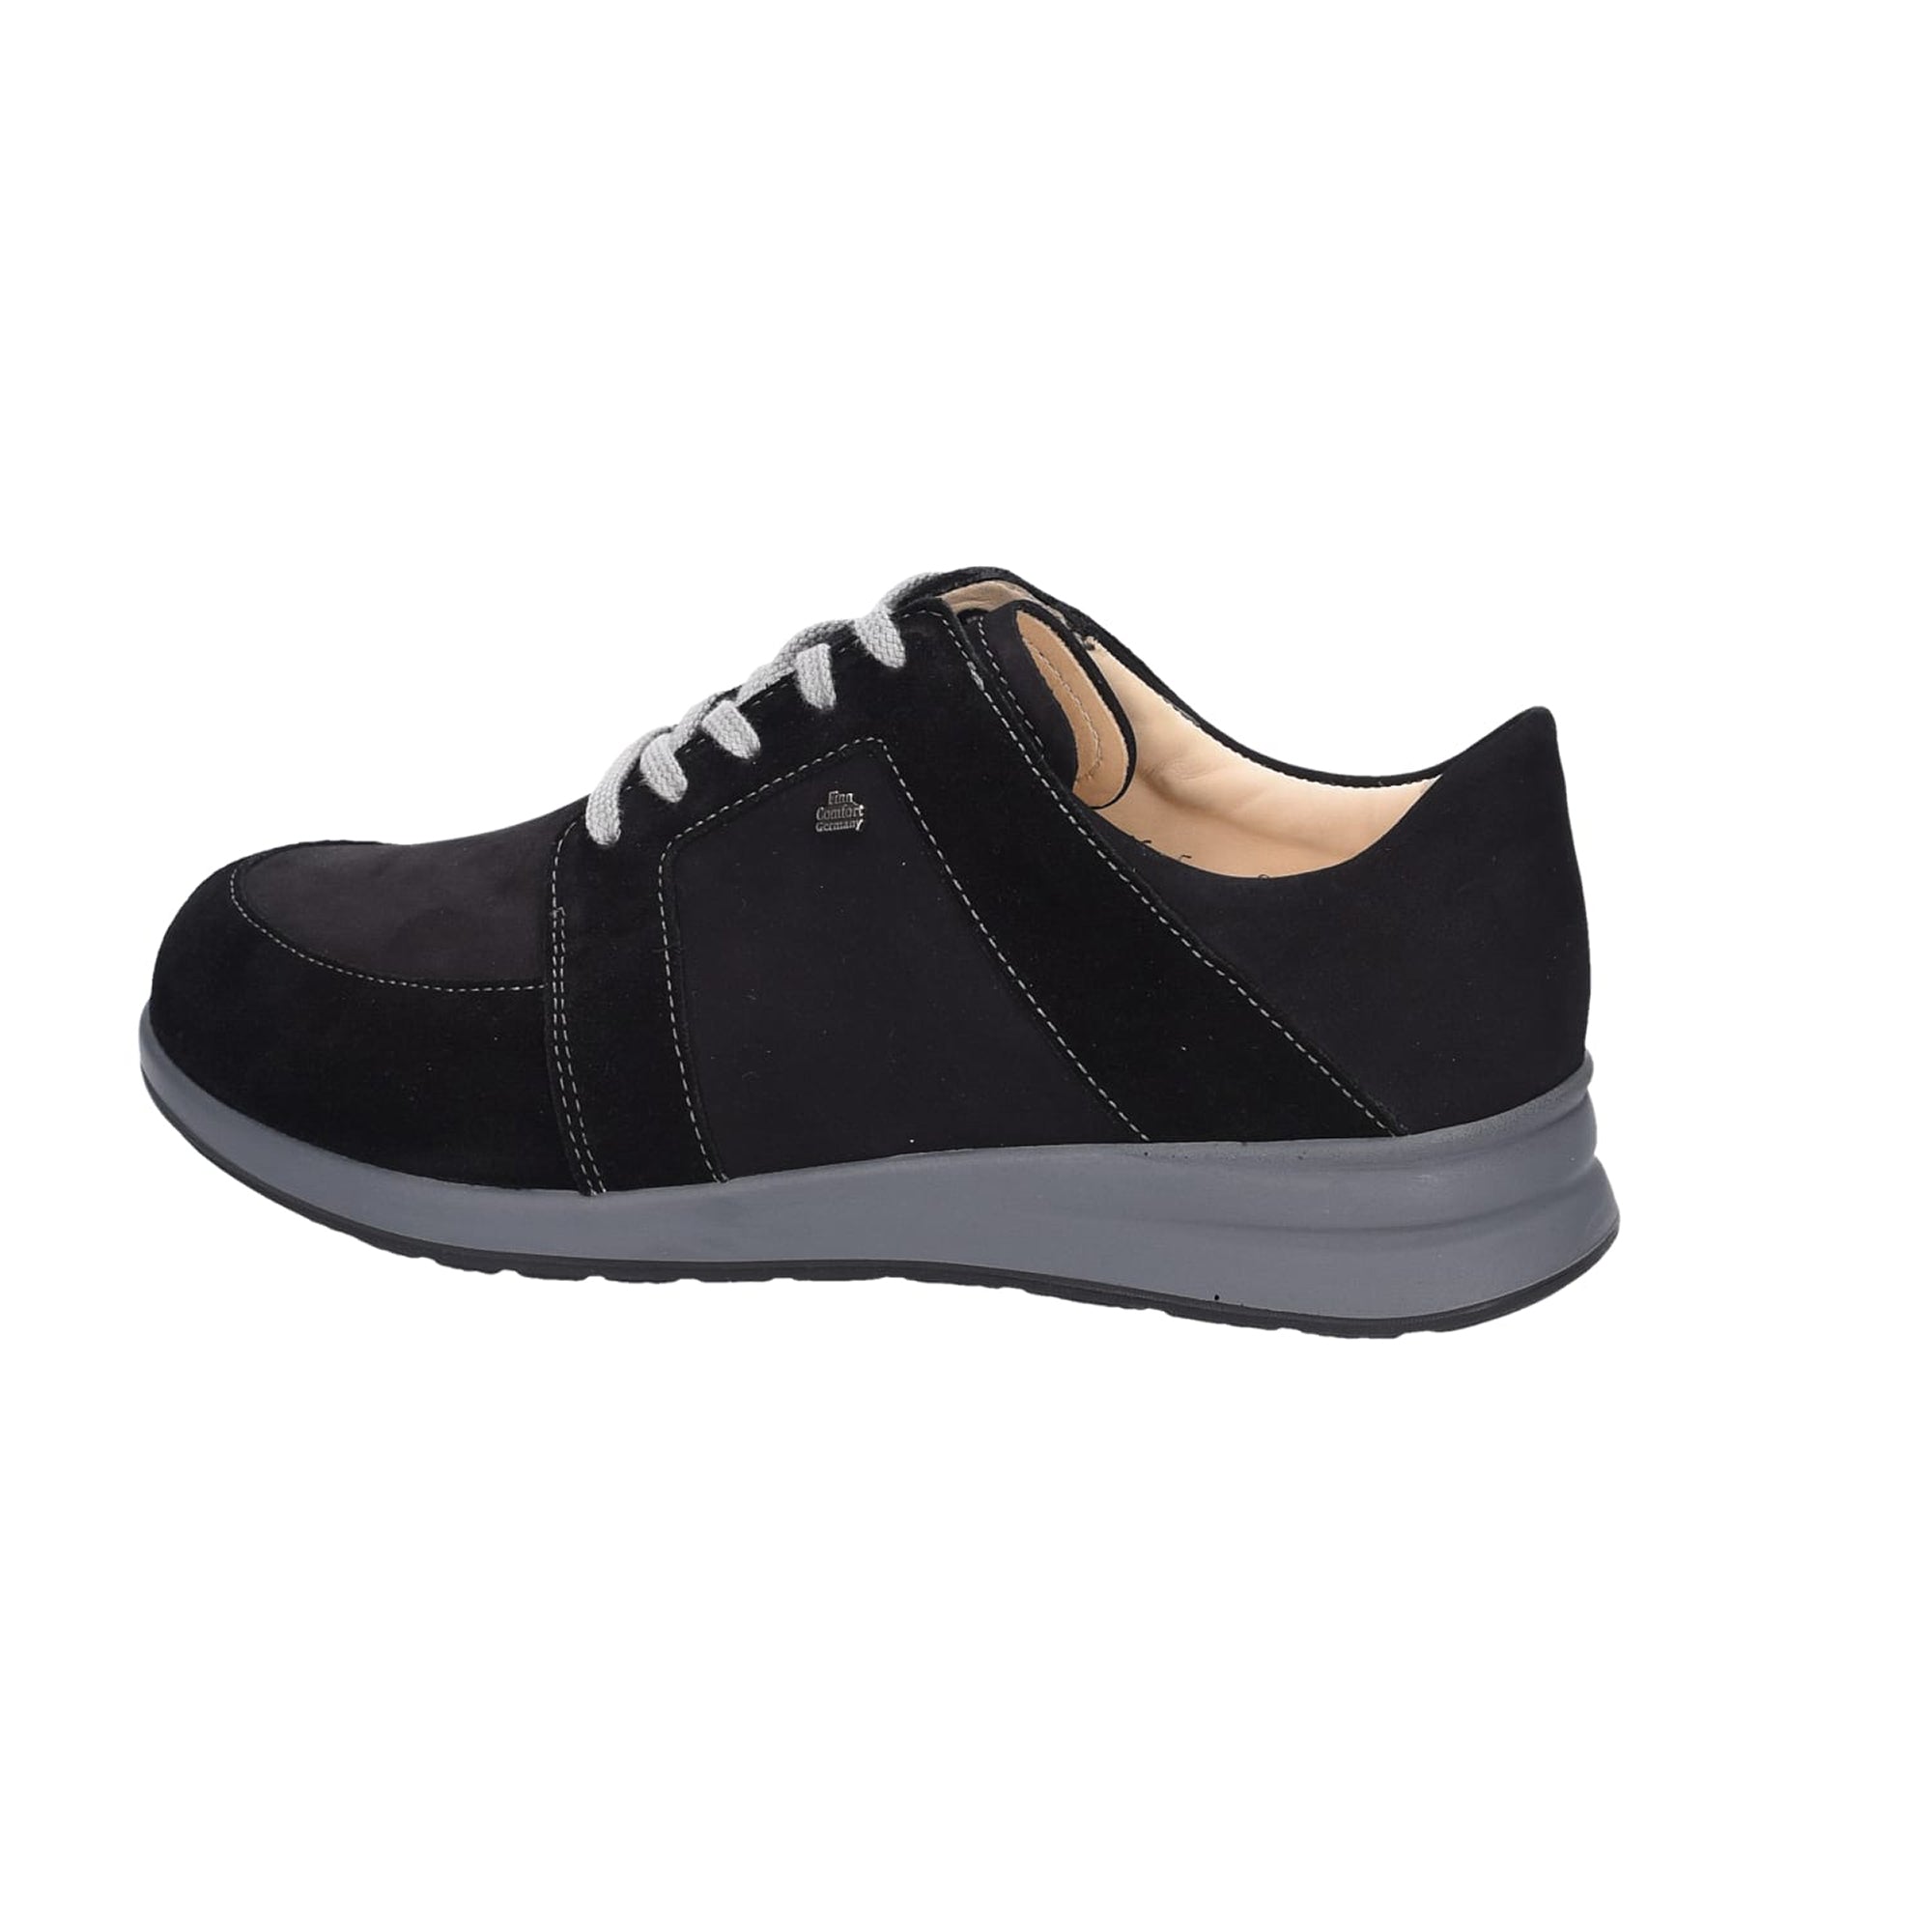 Finn Comfort Fasano Women's Comfortable Black Shoes - Stylish & Durable